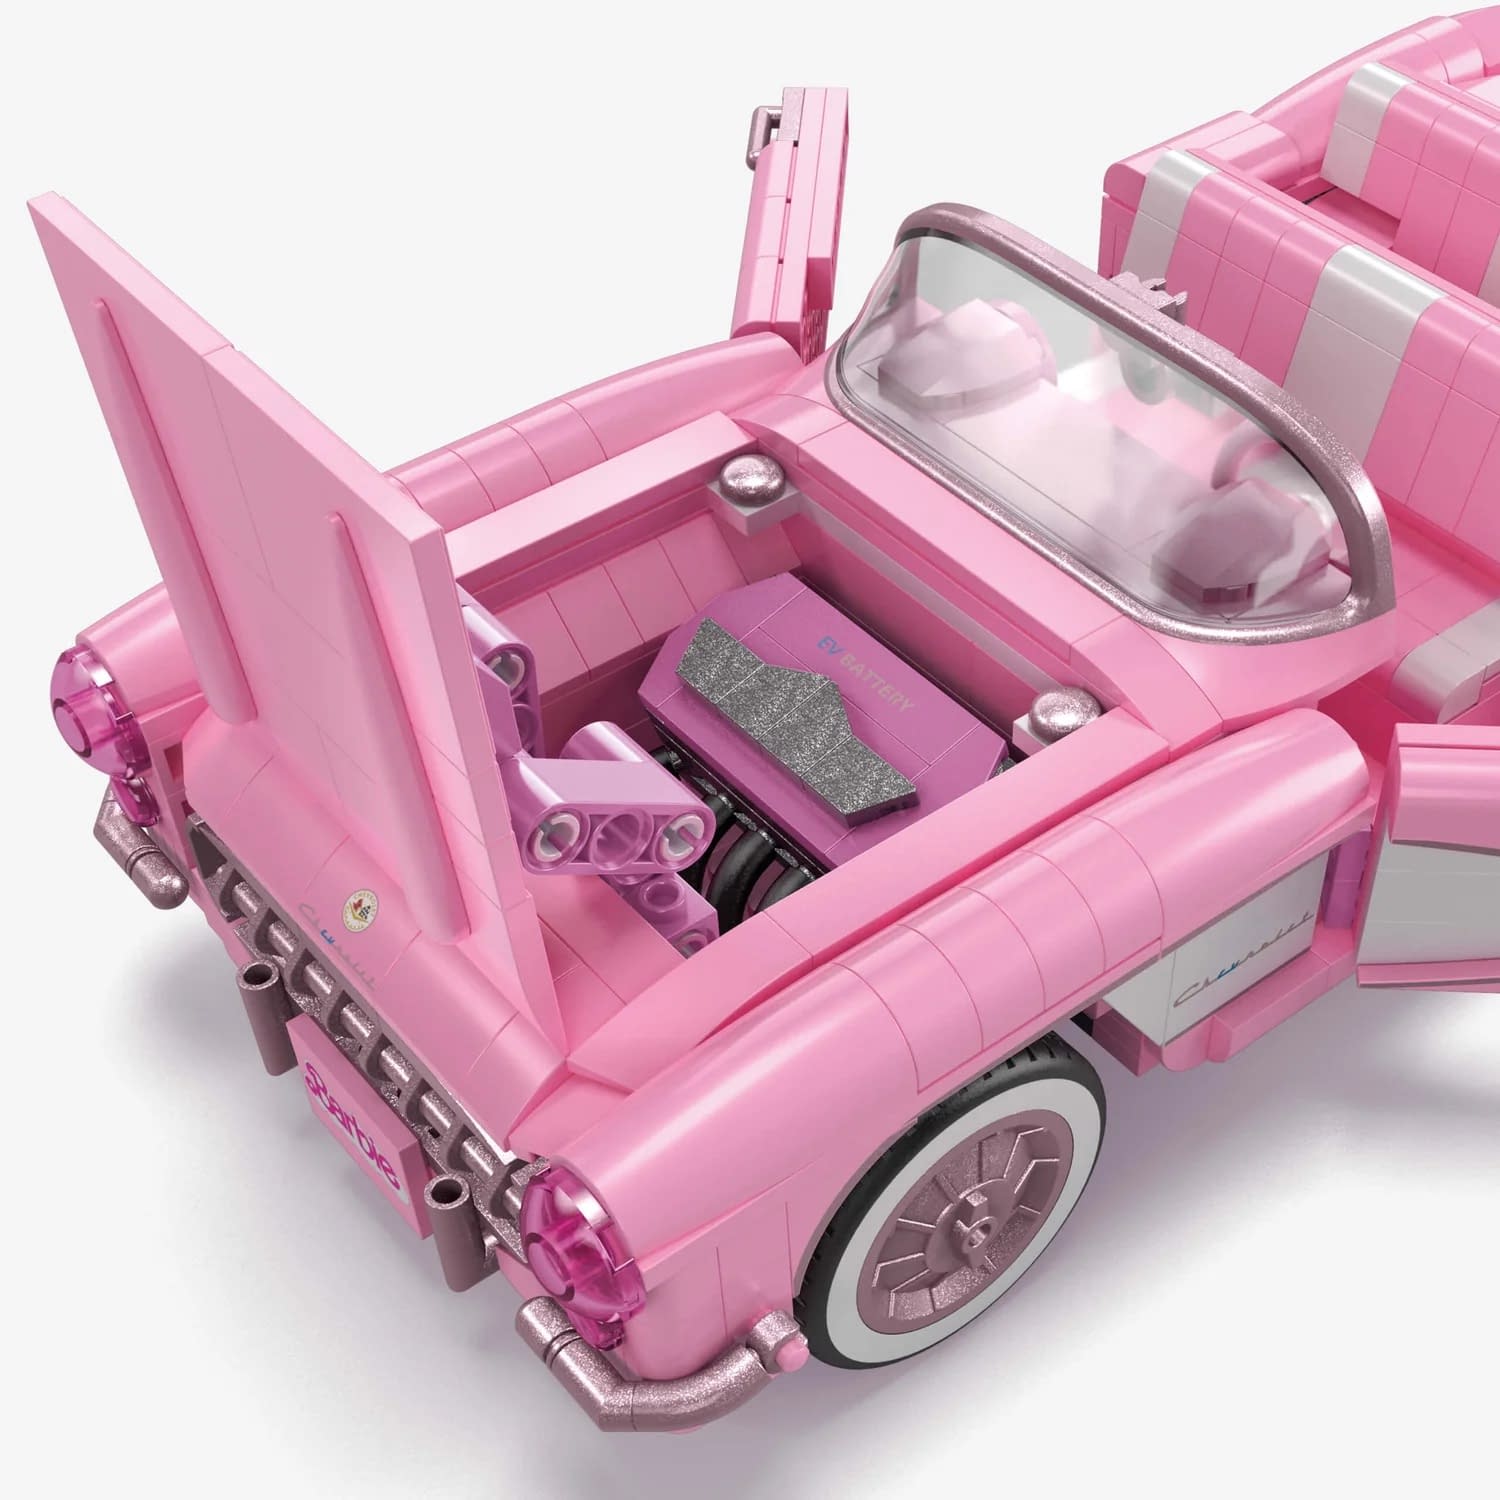 Mattel Drives in with MEGA Barbie The Movie '56 Corvette Stingray Set6